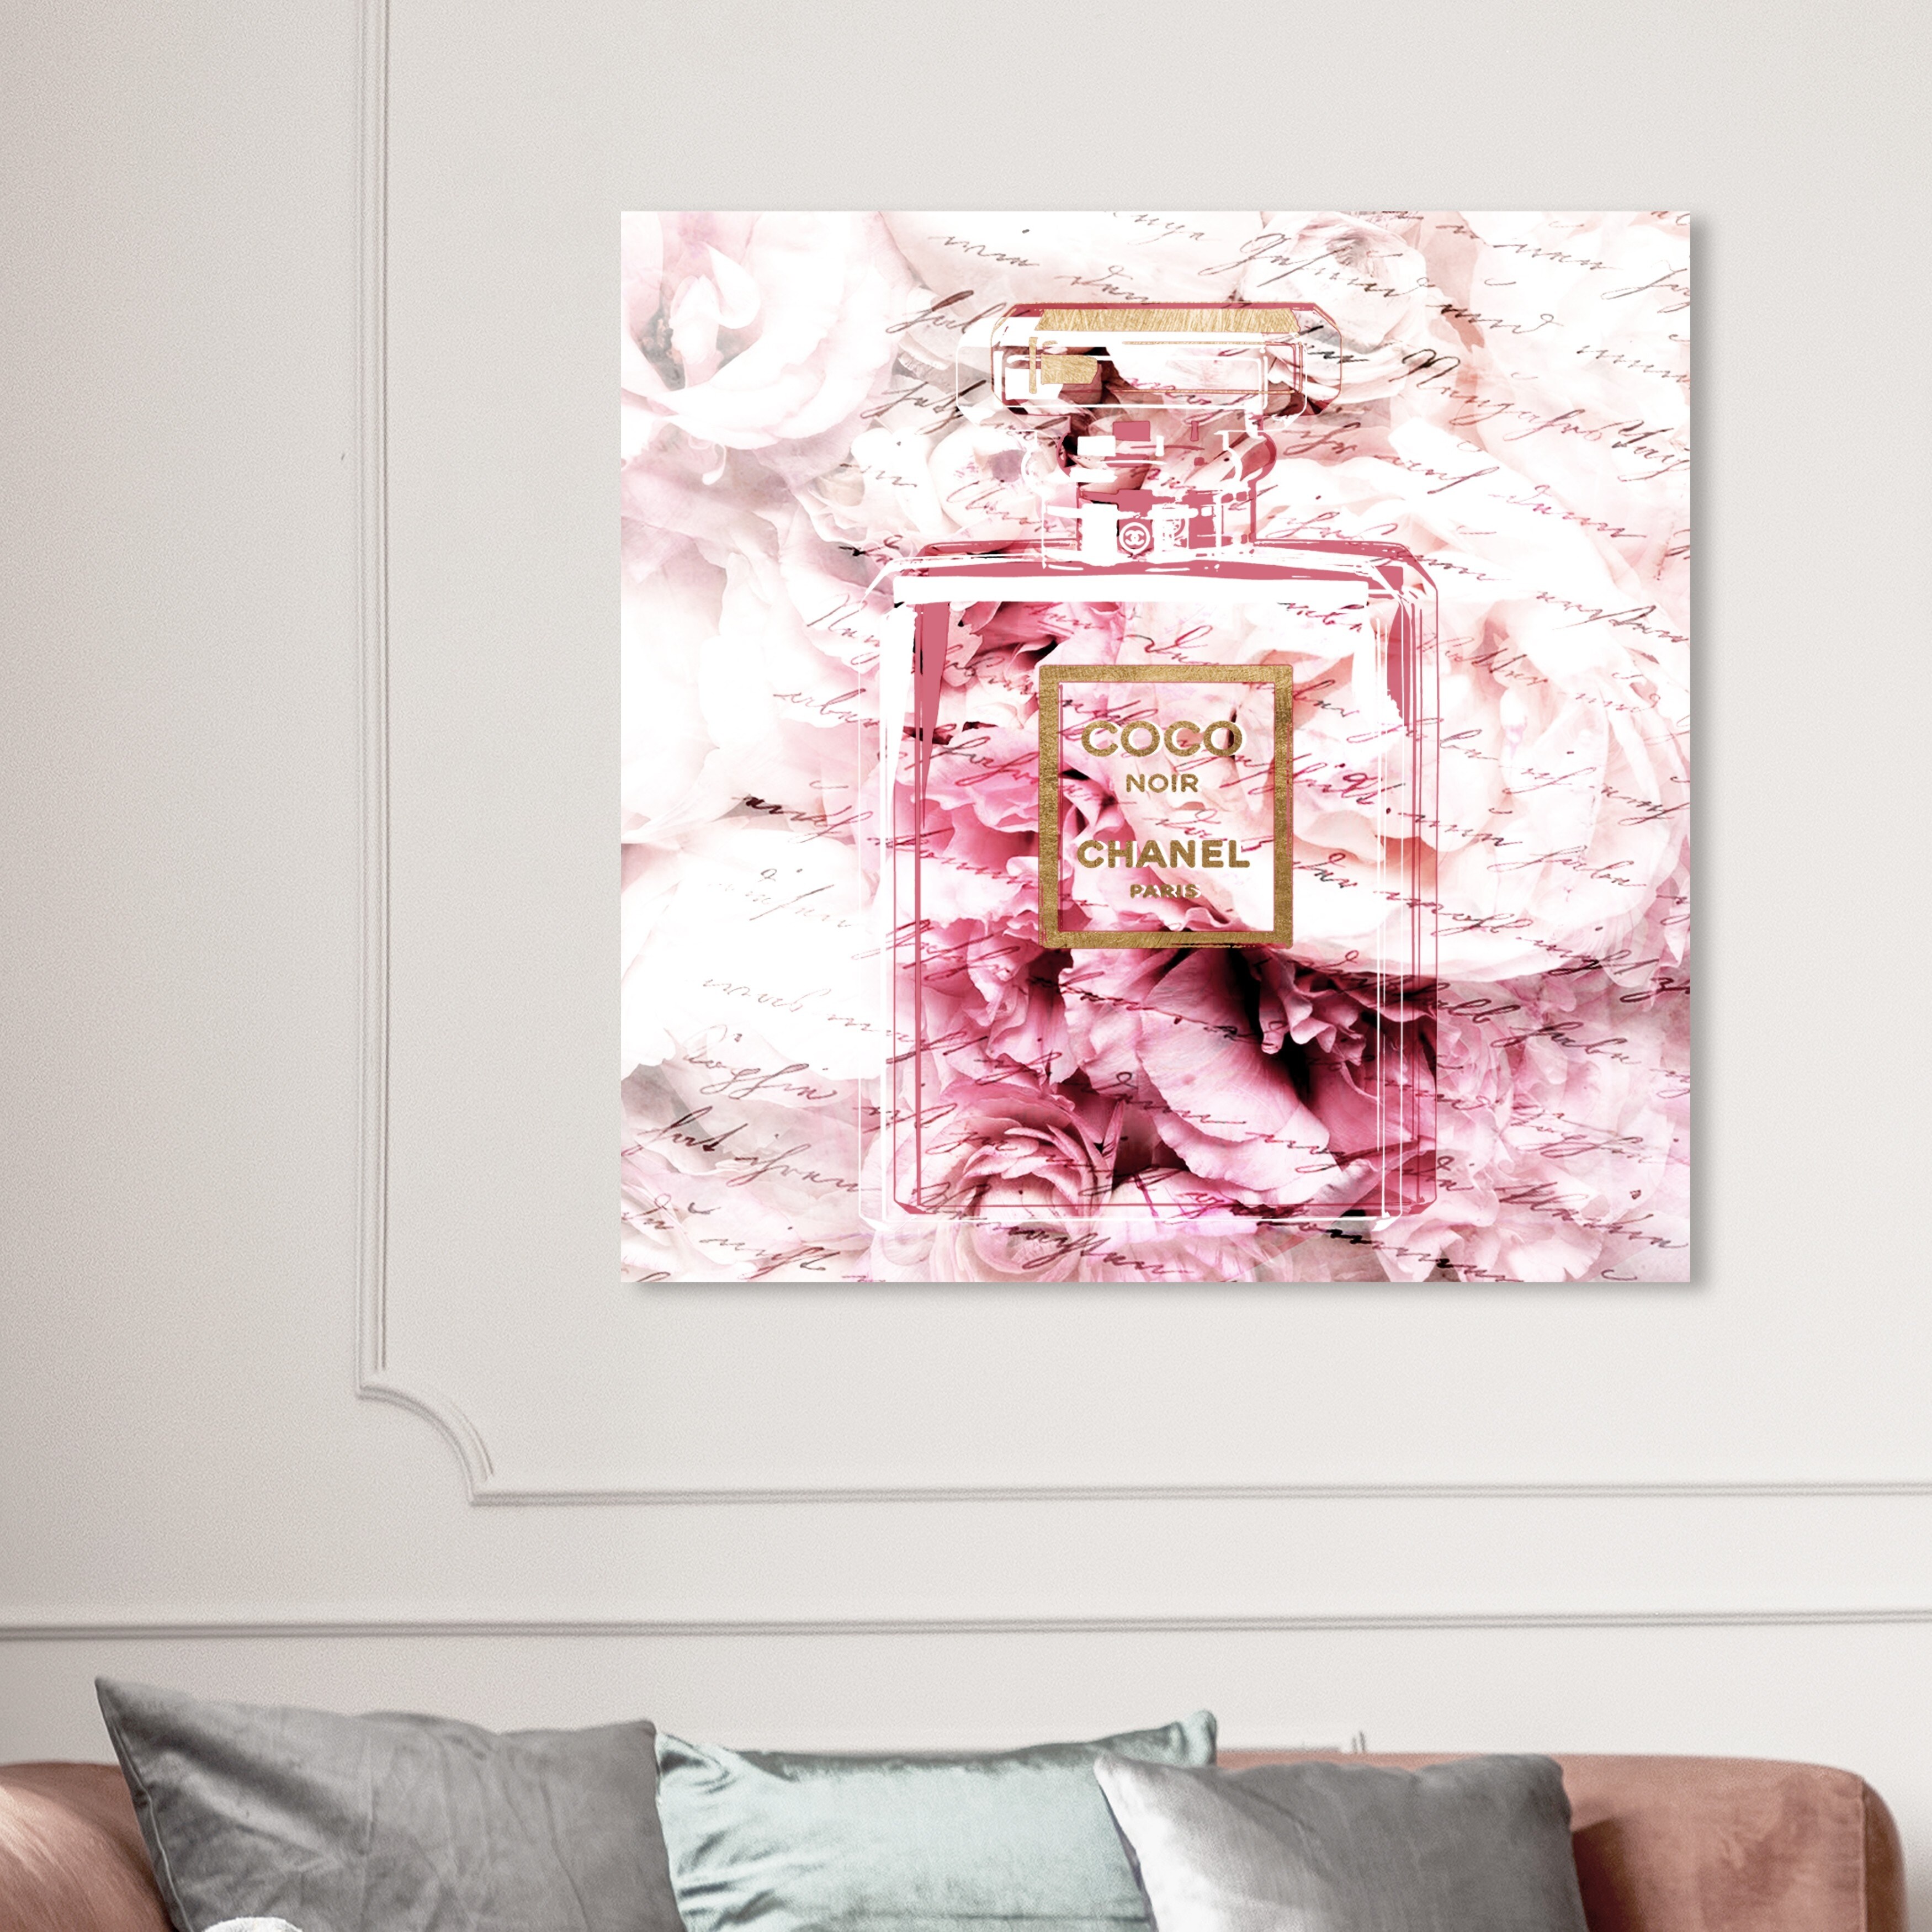 Oliver Gal 'LV Petals' Fashion and Glam Wall Art Framed Canvas Print Fashion - Orange, Pink - 12 x 12 - Black